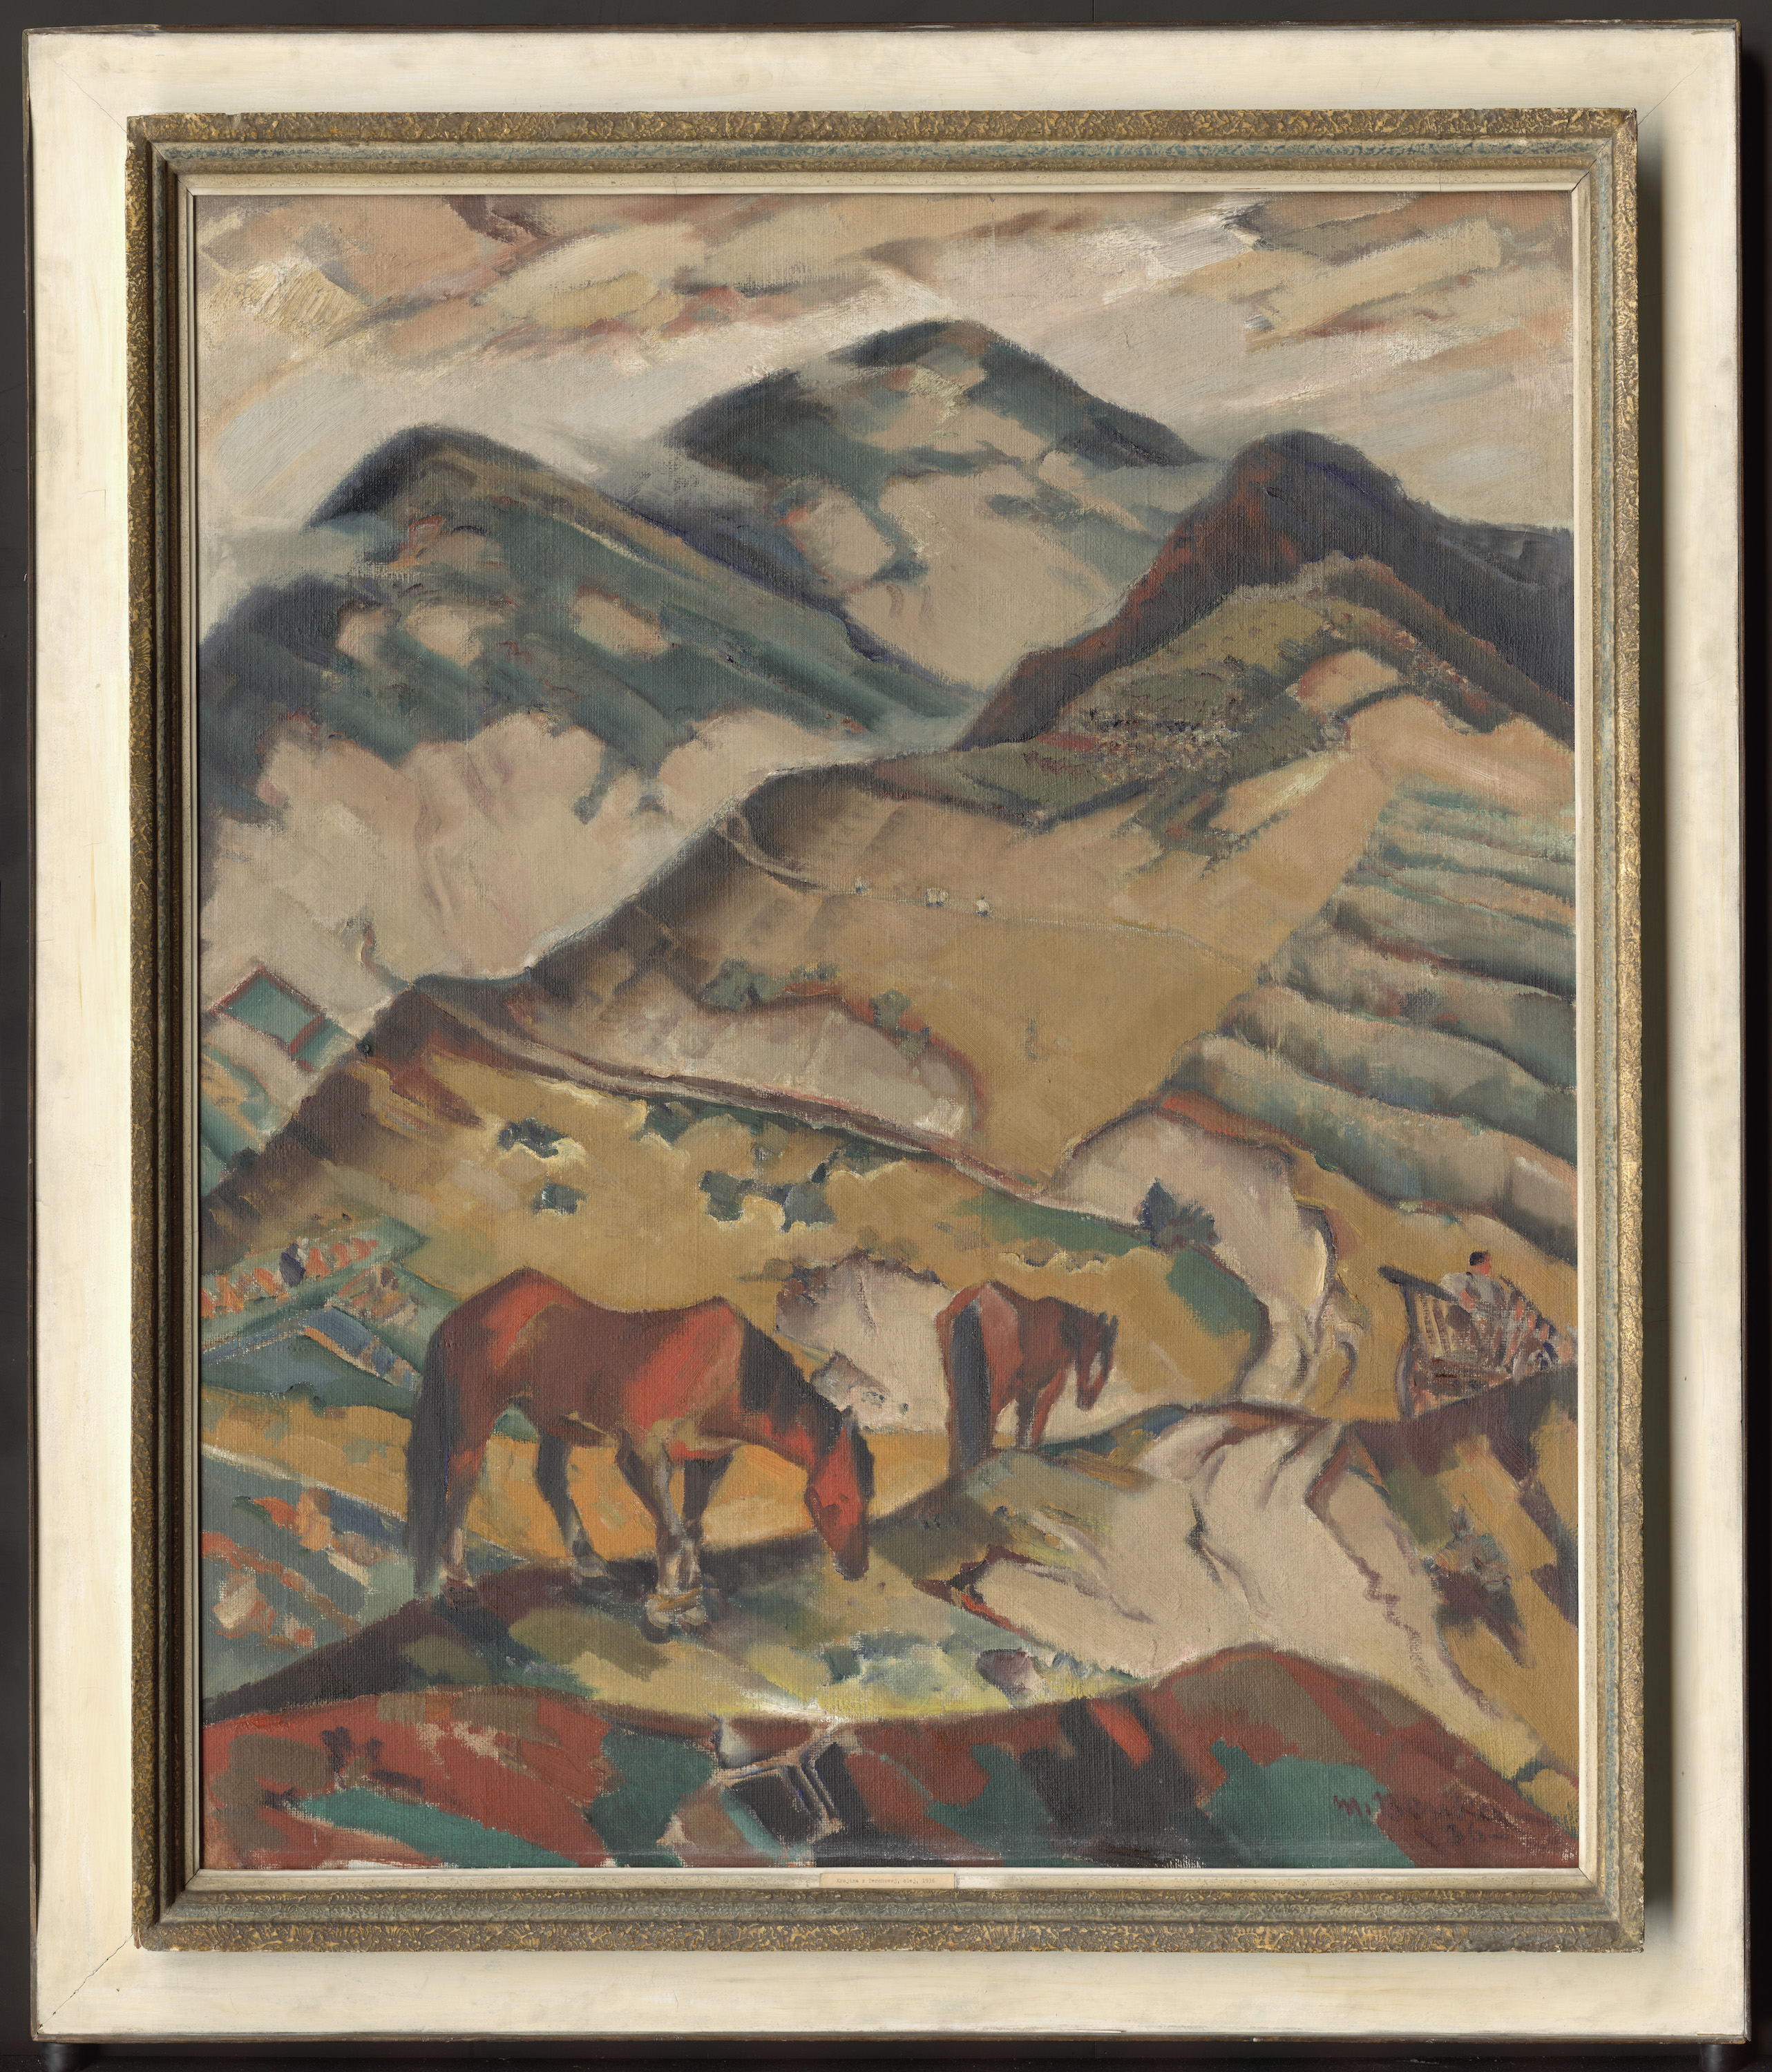 Terchová Manzarası by Martin Benka - 1936 